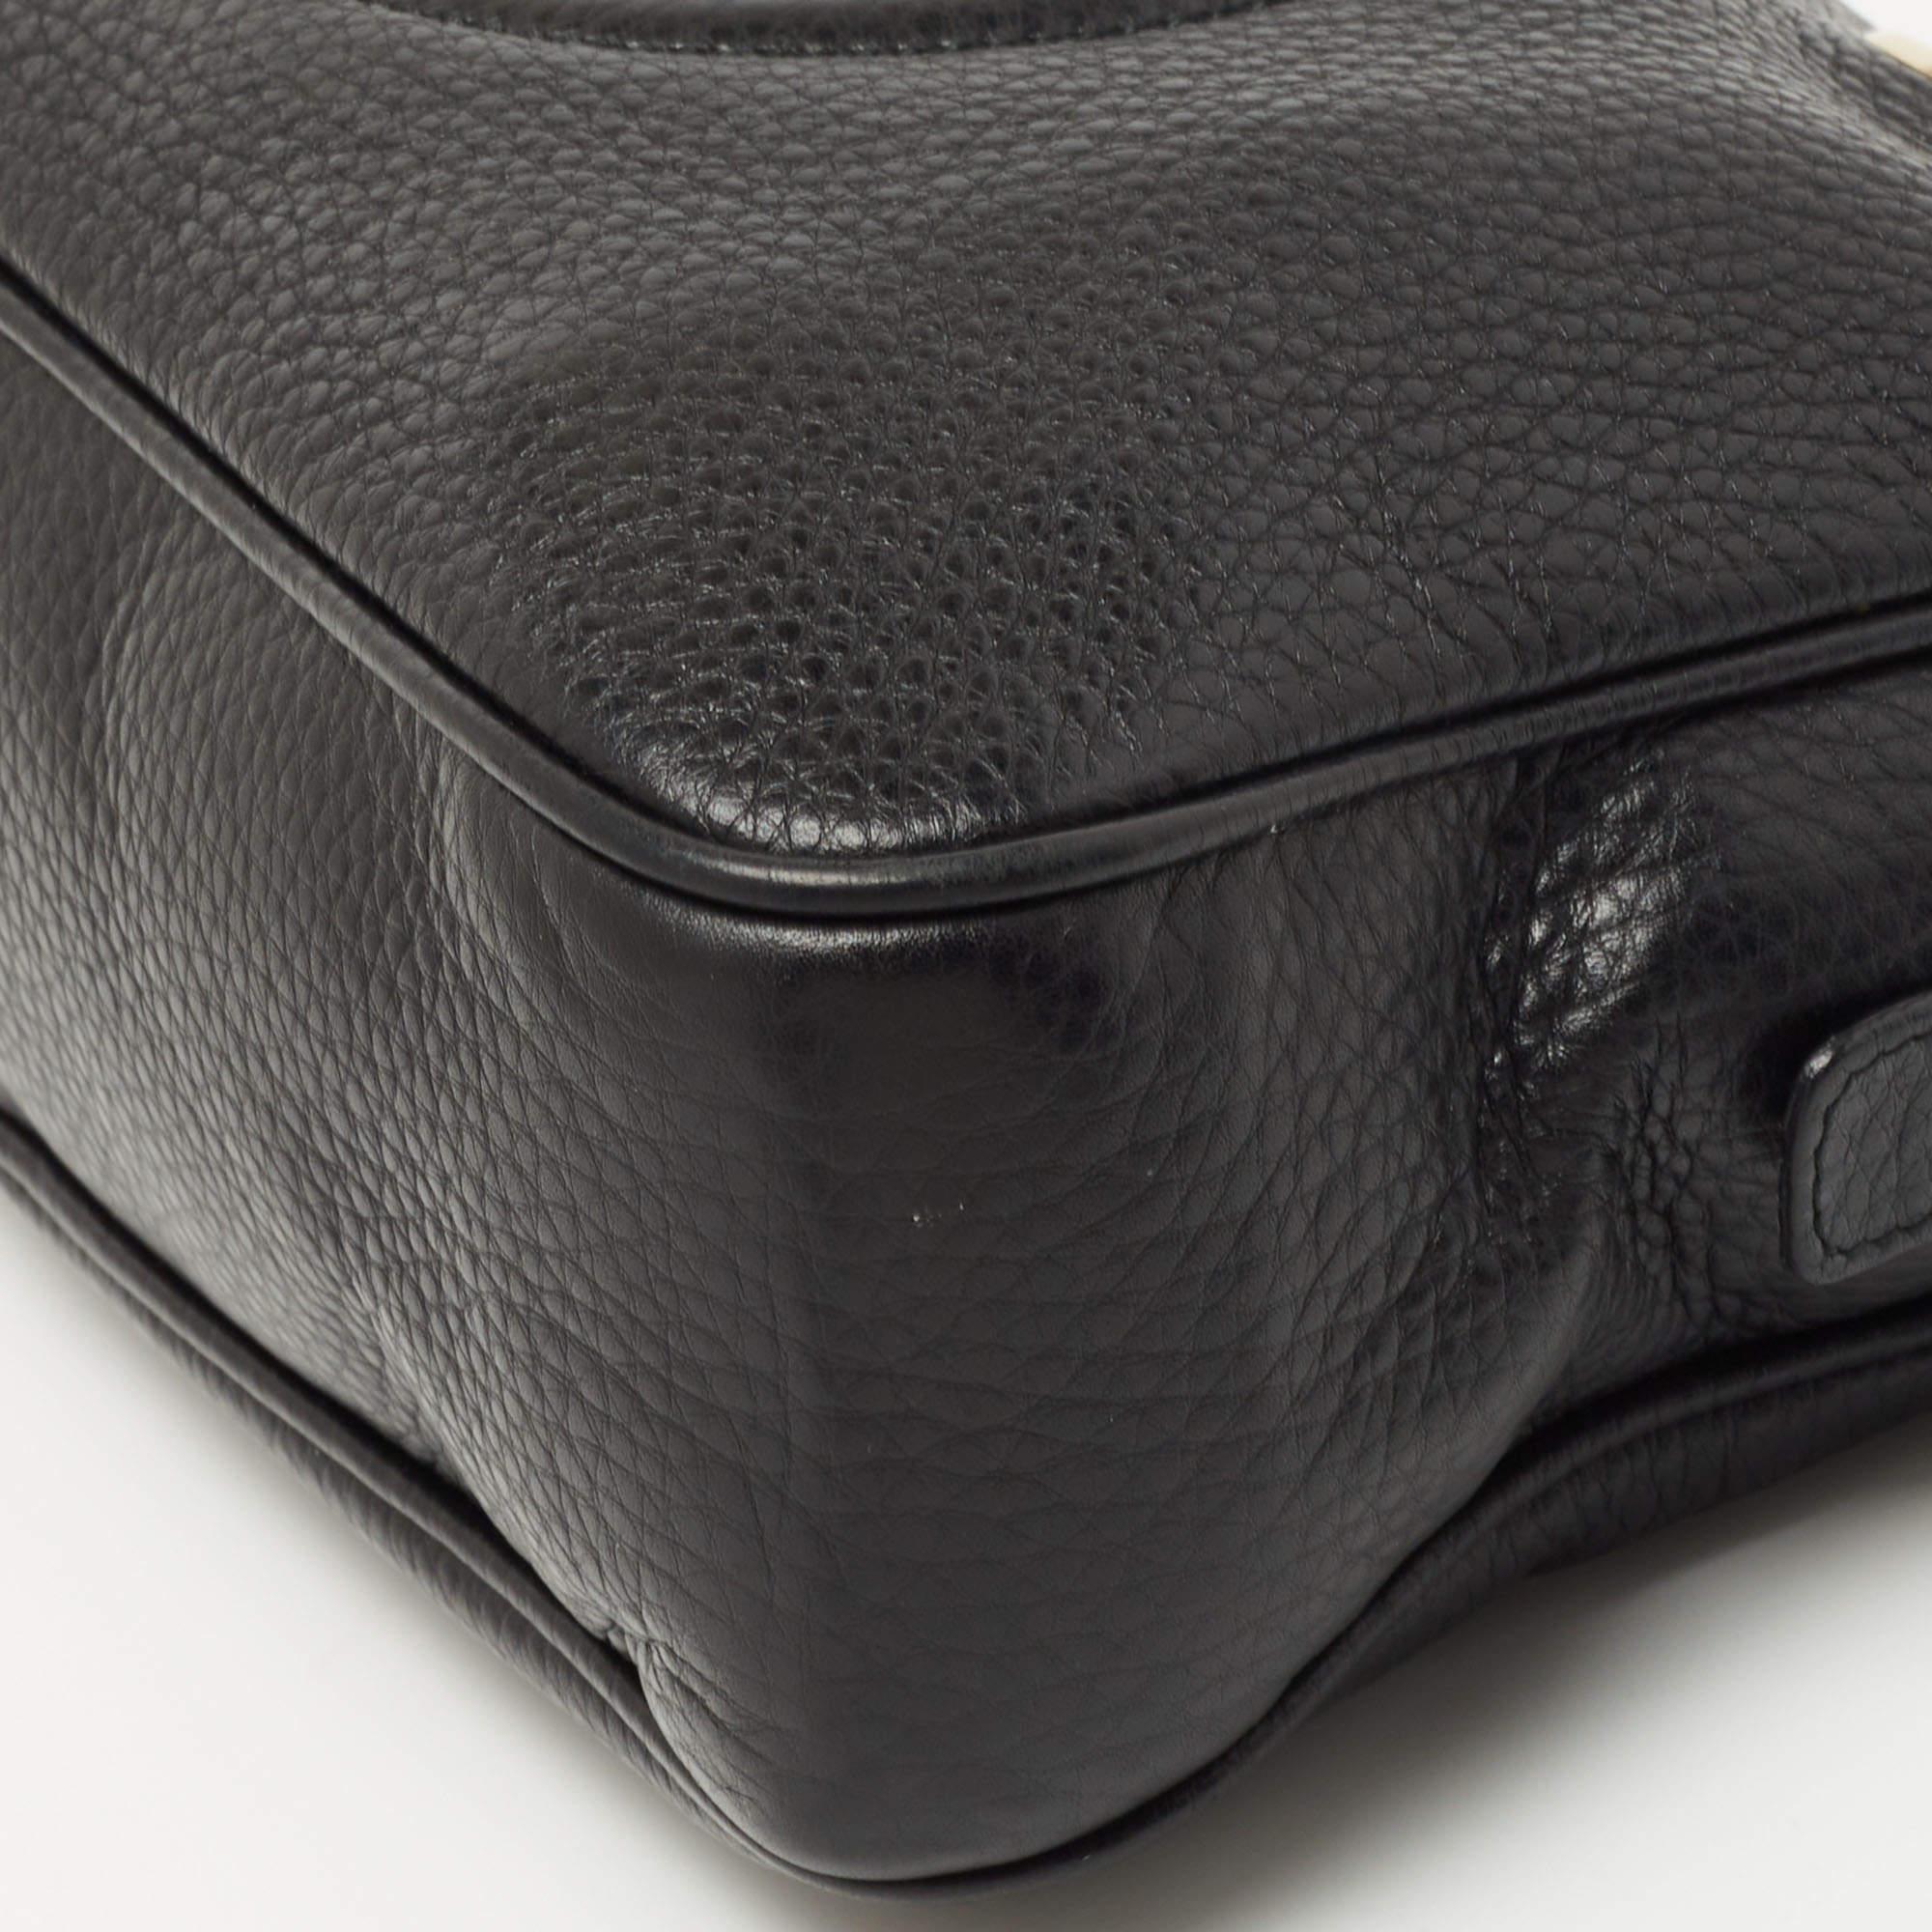 Gucci Black Leather Medium Soho Chain Shoulder Bag 8